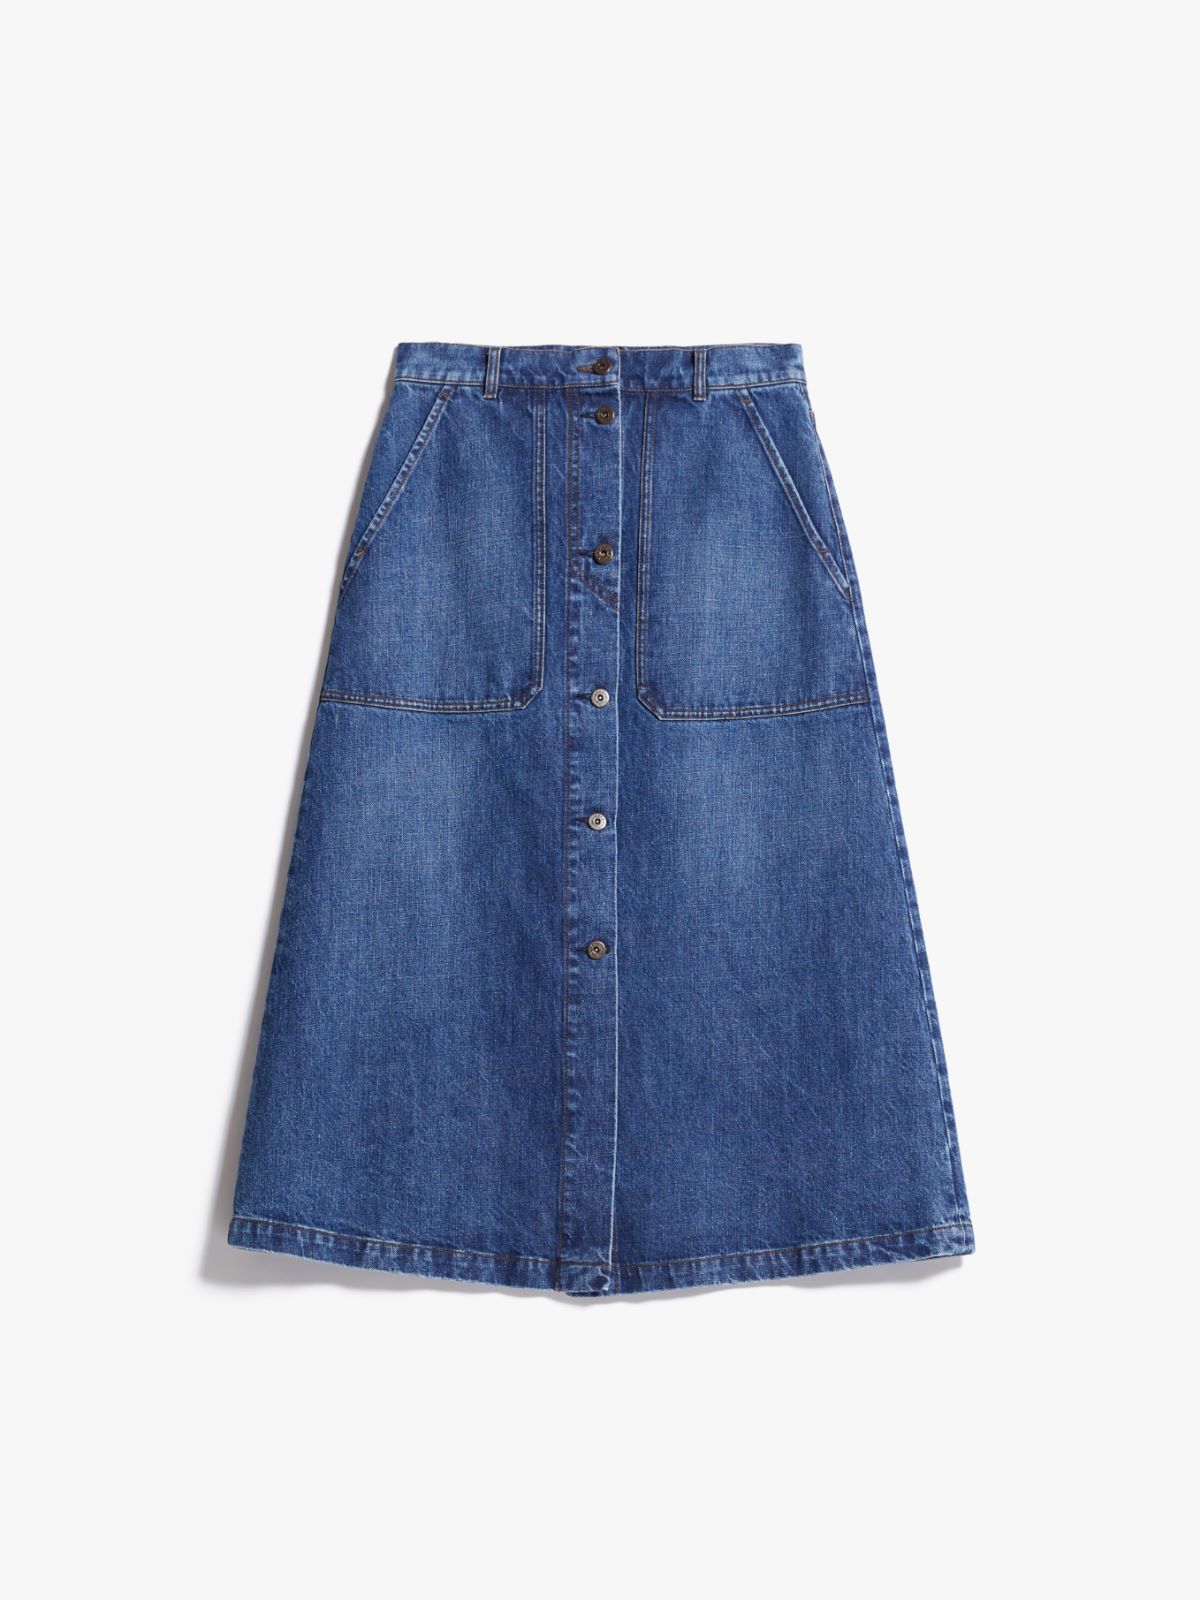 Skirt in organic cotton denim - NAVY - Weekend Max Mara - 5